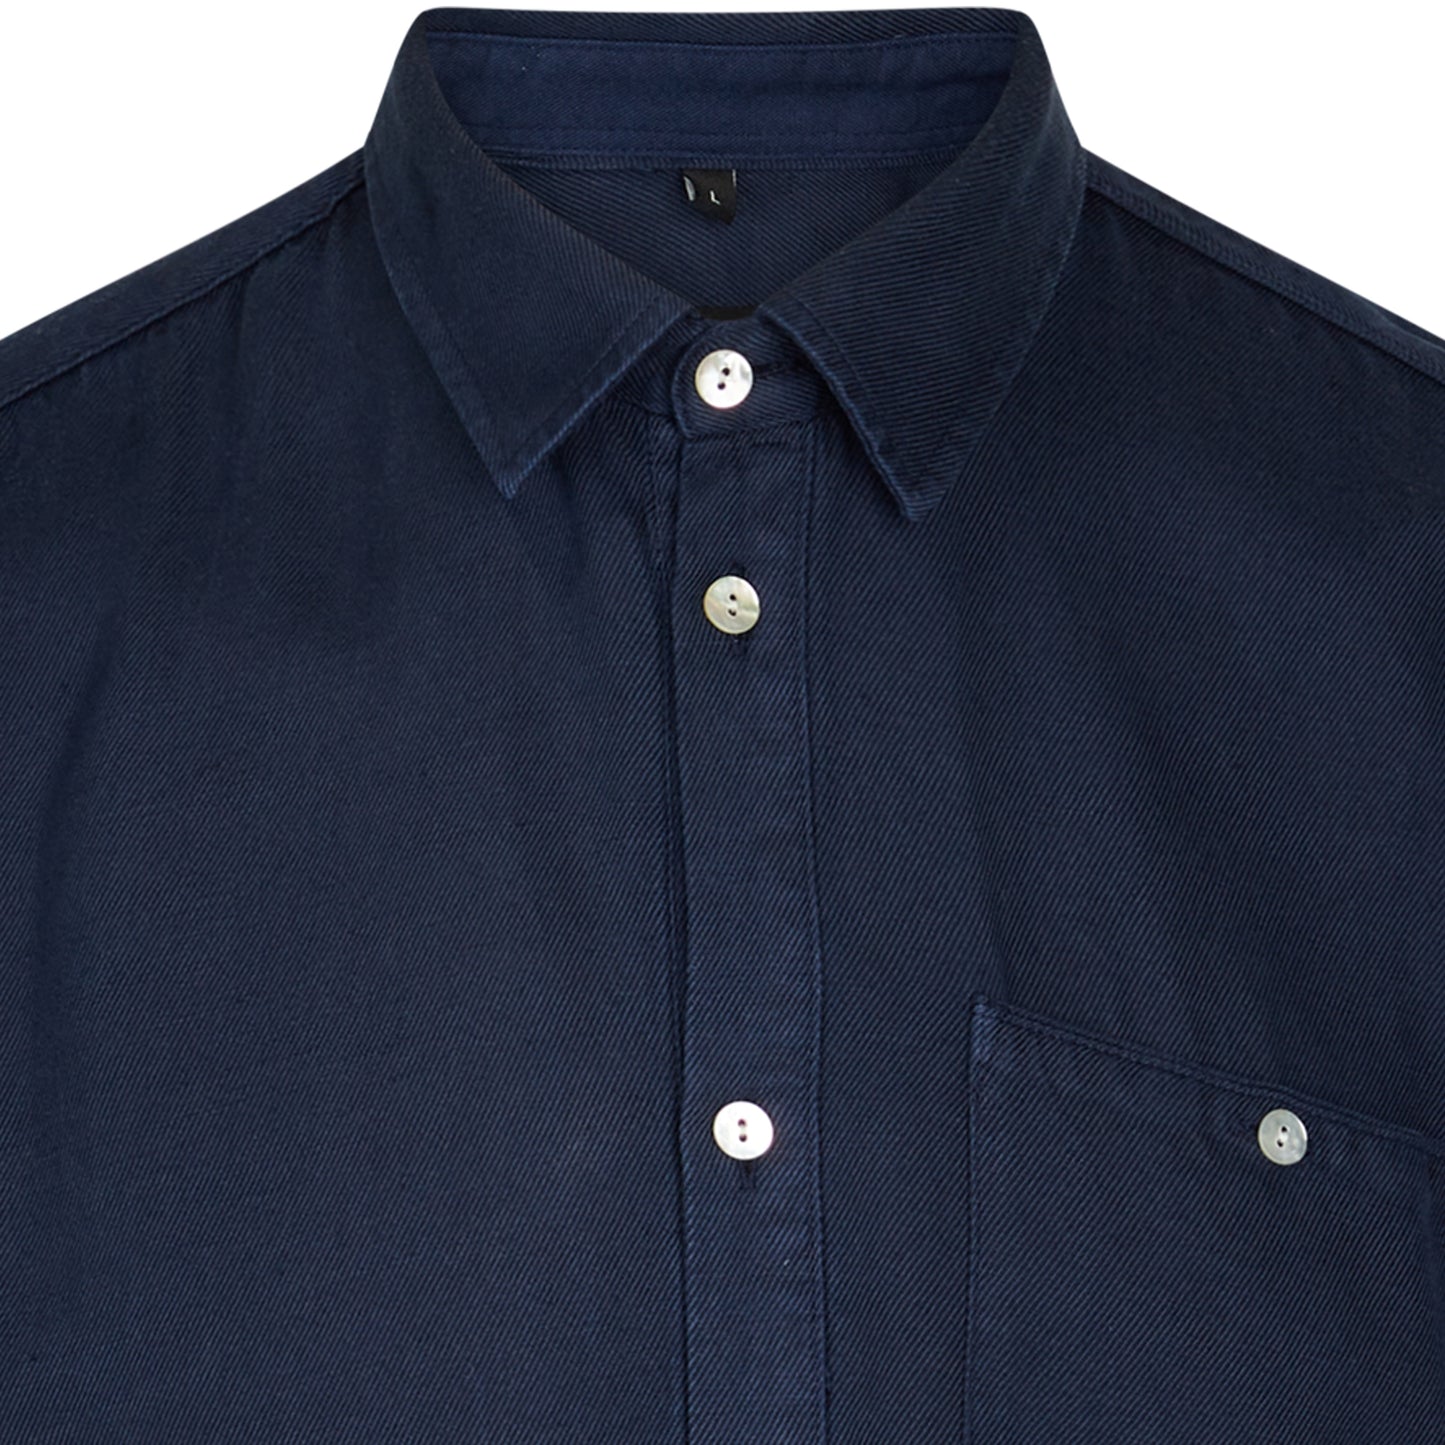 Bruuns Bazaar Men - Lin Nuit Shirt - Navy Blazer